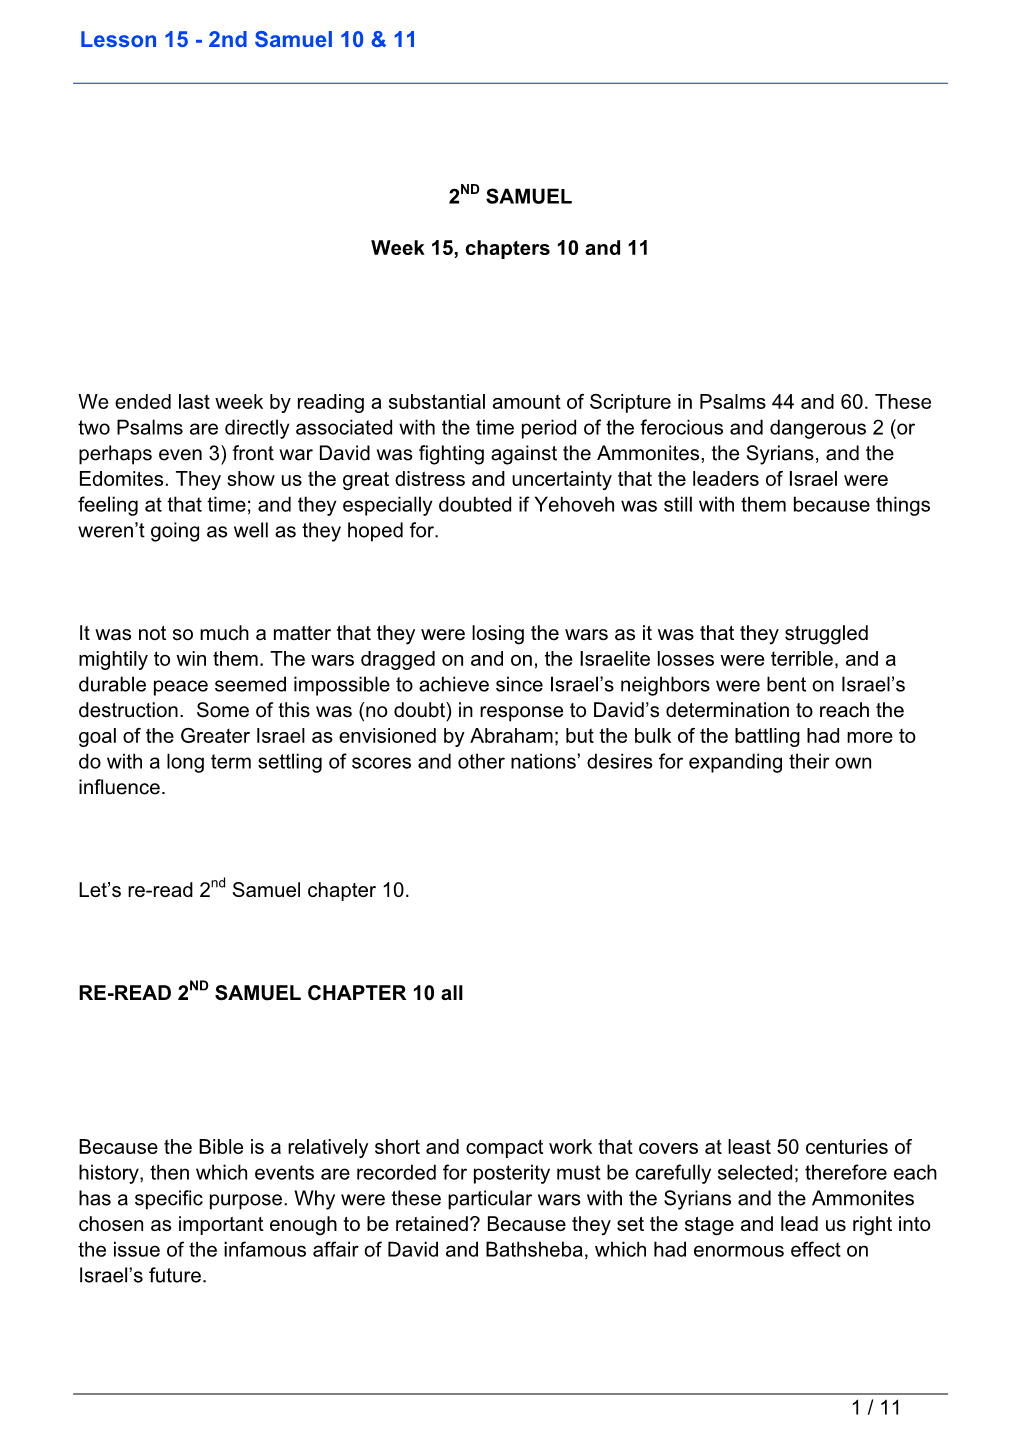 Lesson 15 - 2Nd Samuel 10 & 11